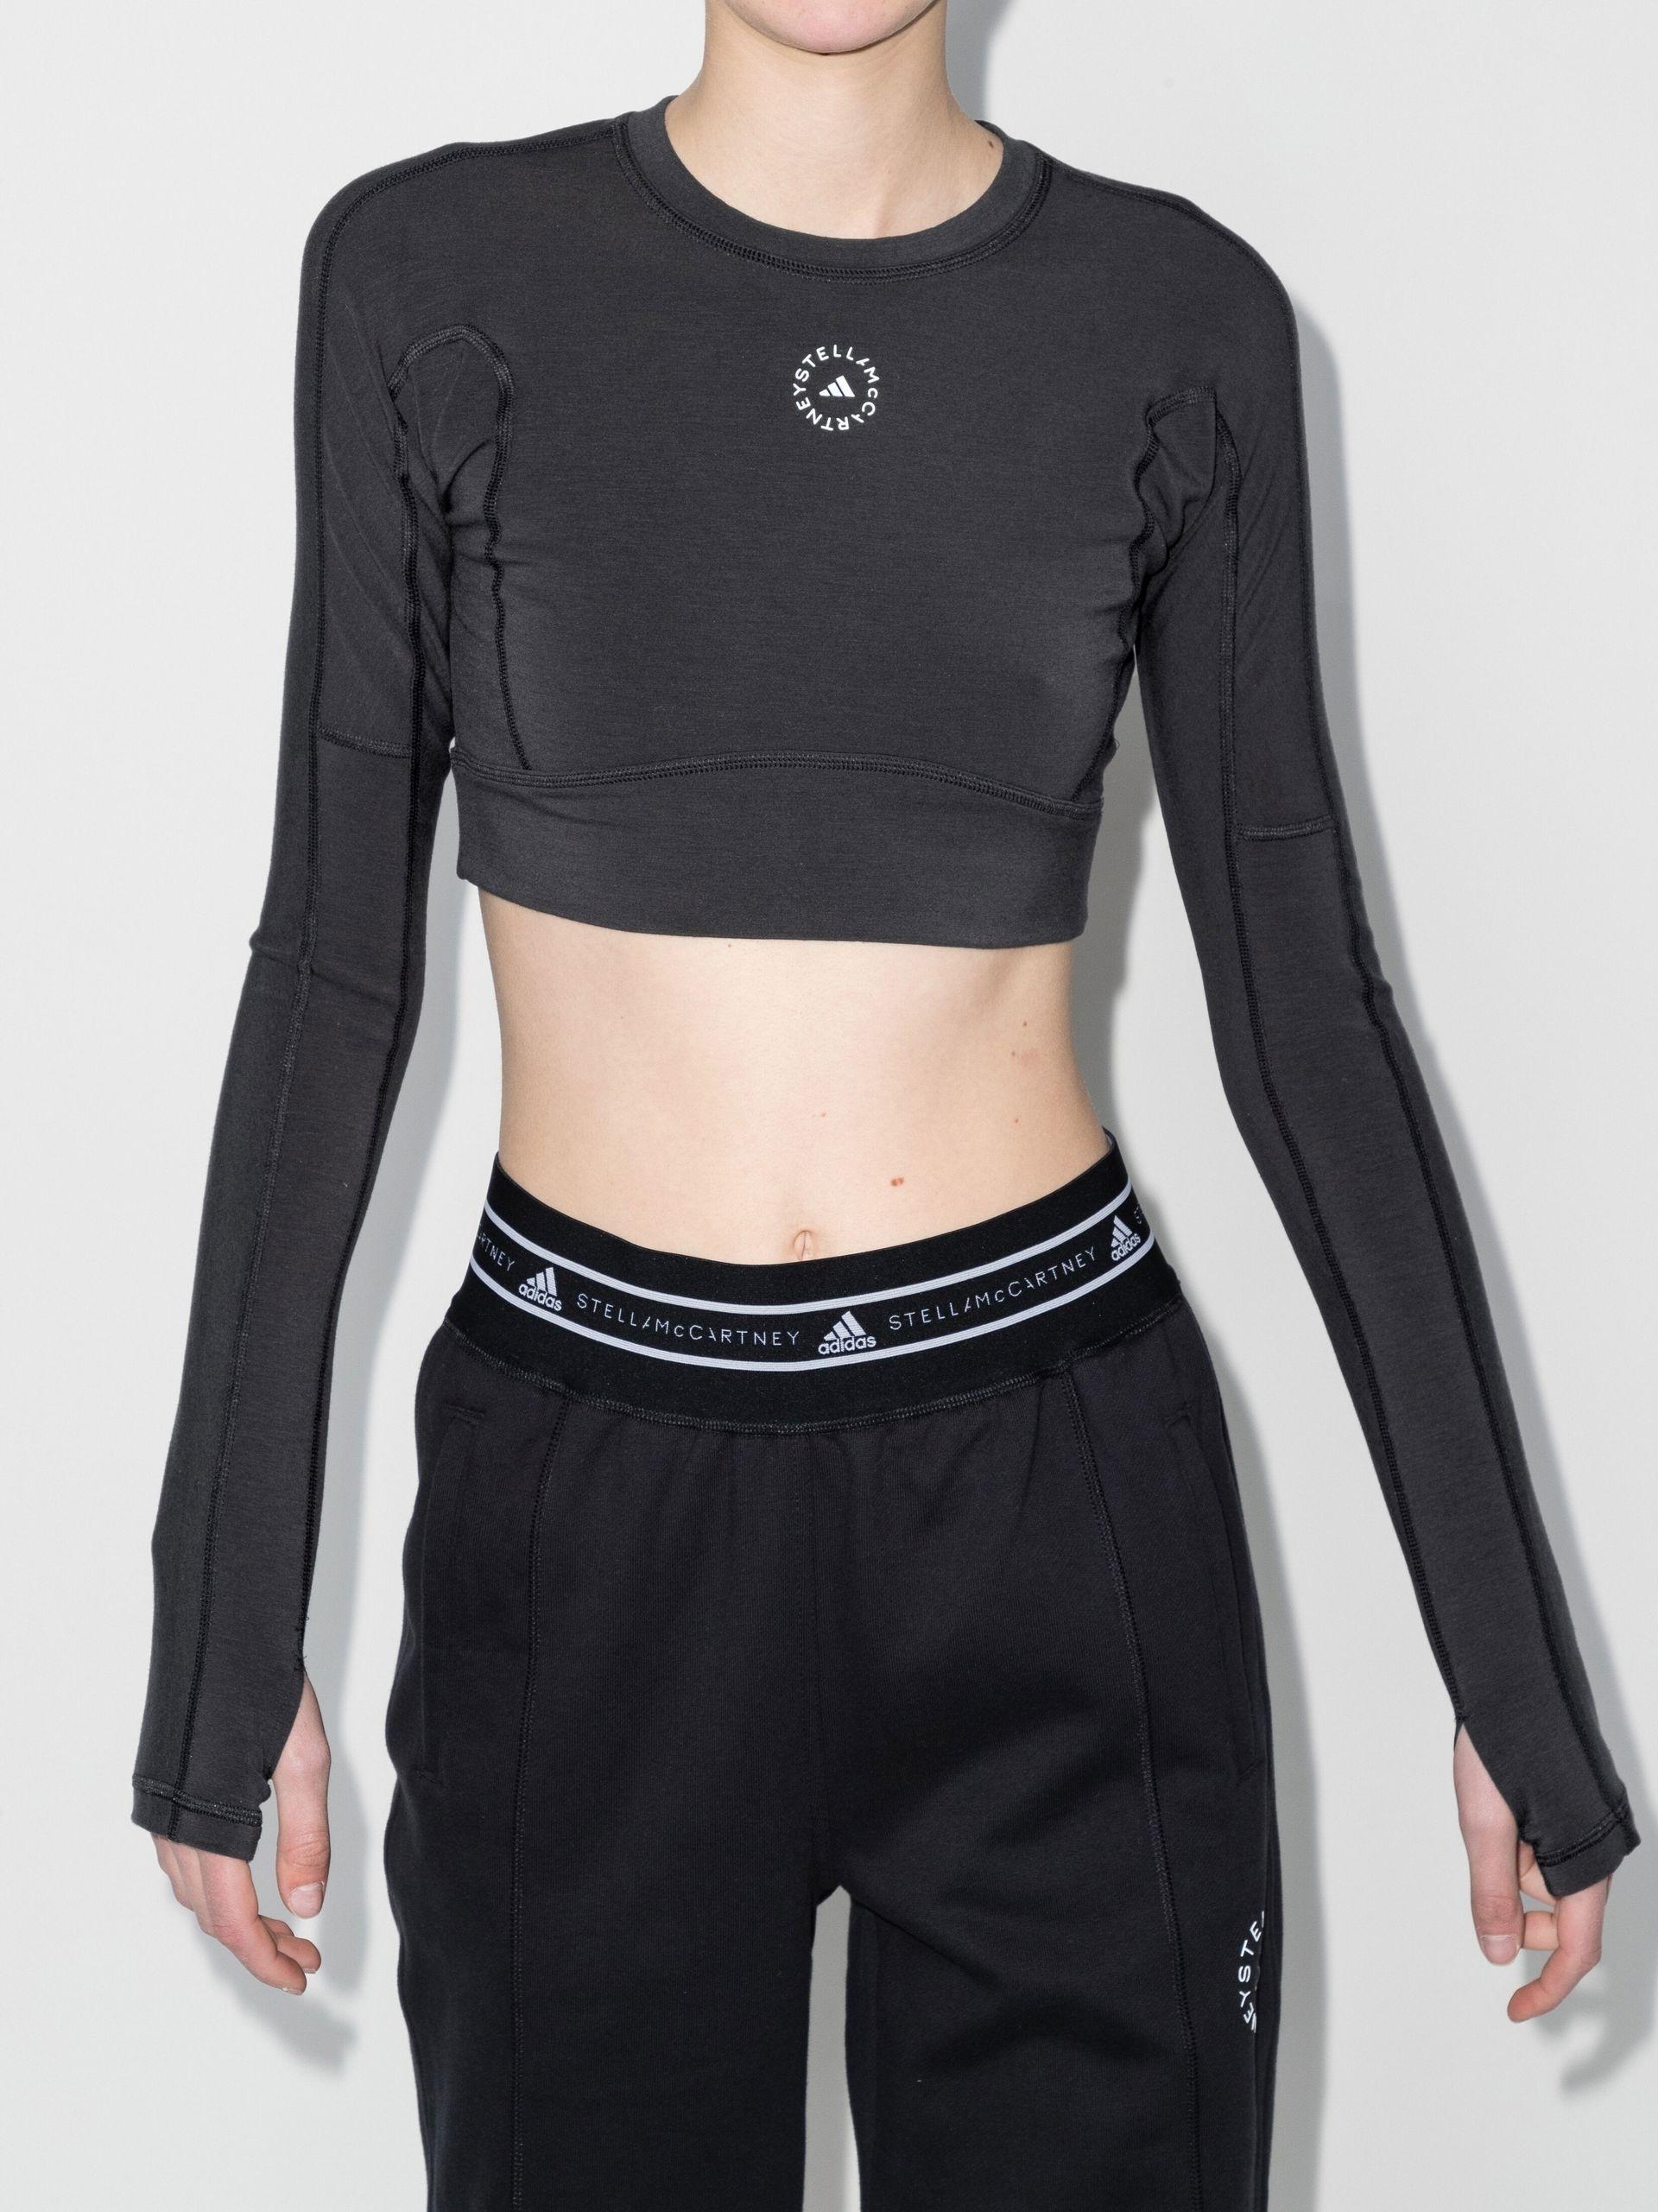 adidas By Stella McCartney Truestrength Yoga Crop Top - Women's -  Modal/spandex/elastane/recycled Spandex in Black | Lyst